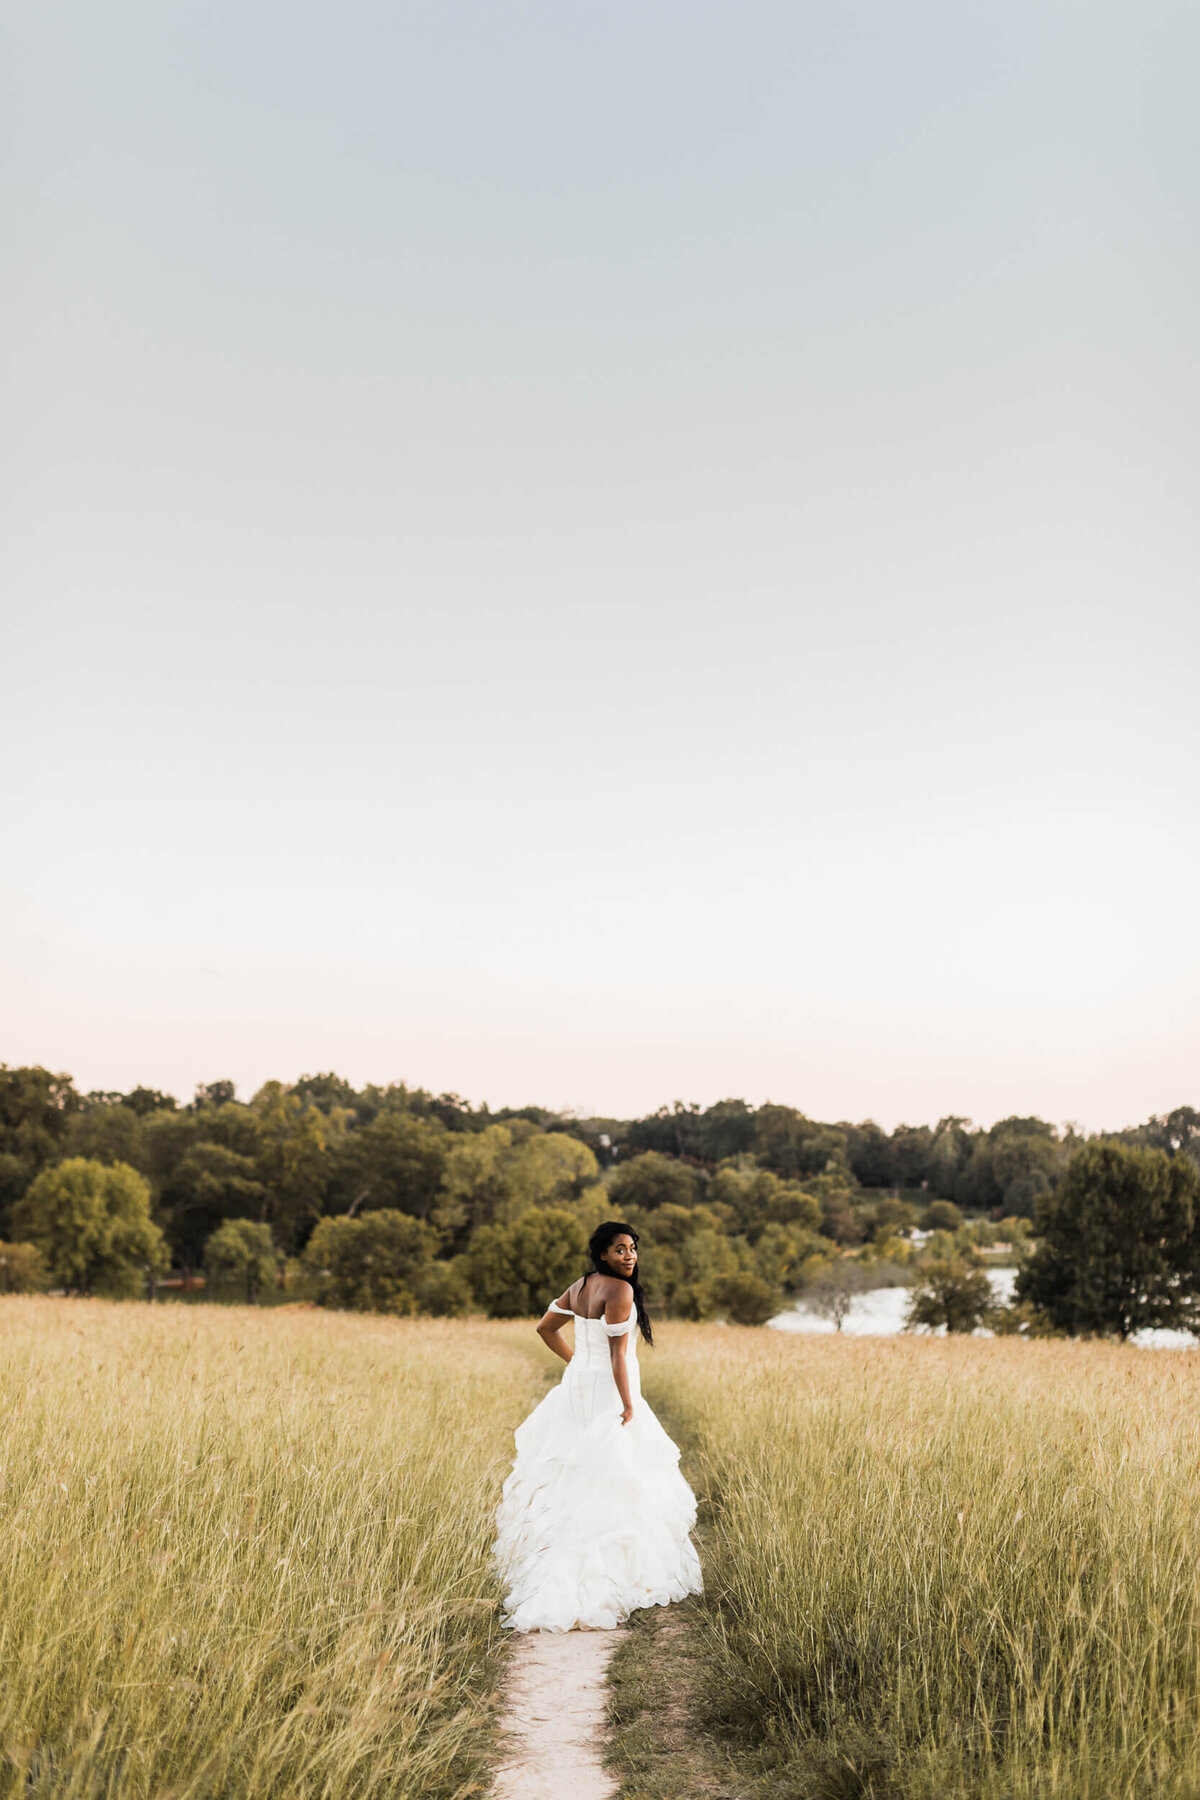 Outdoor wedding dress photos in Dallas